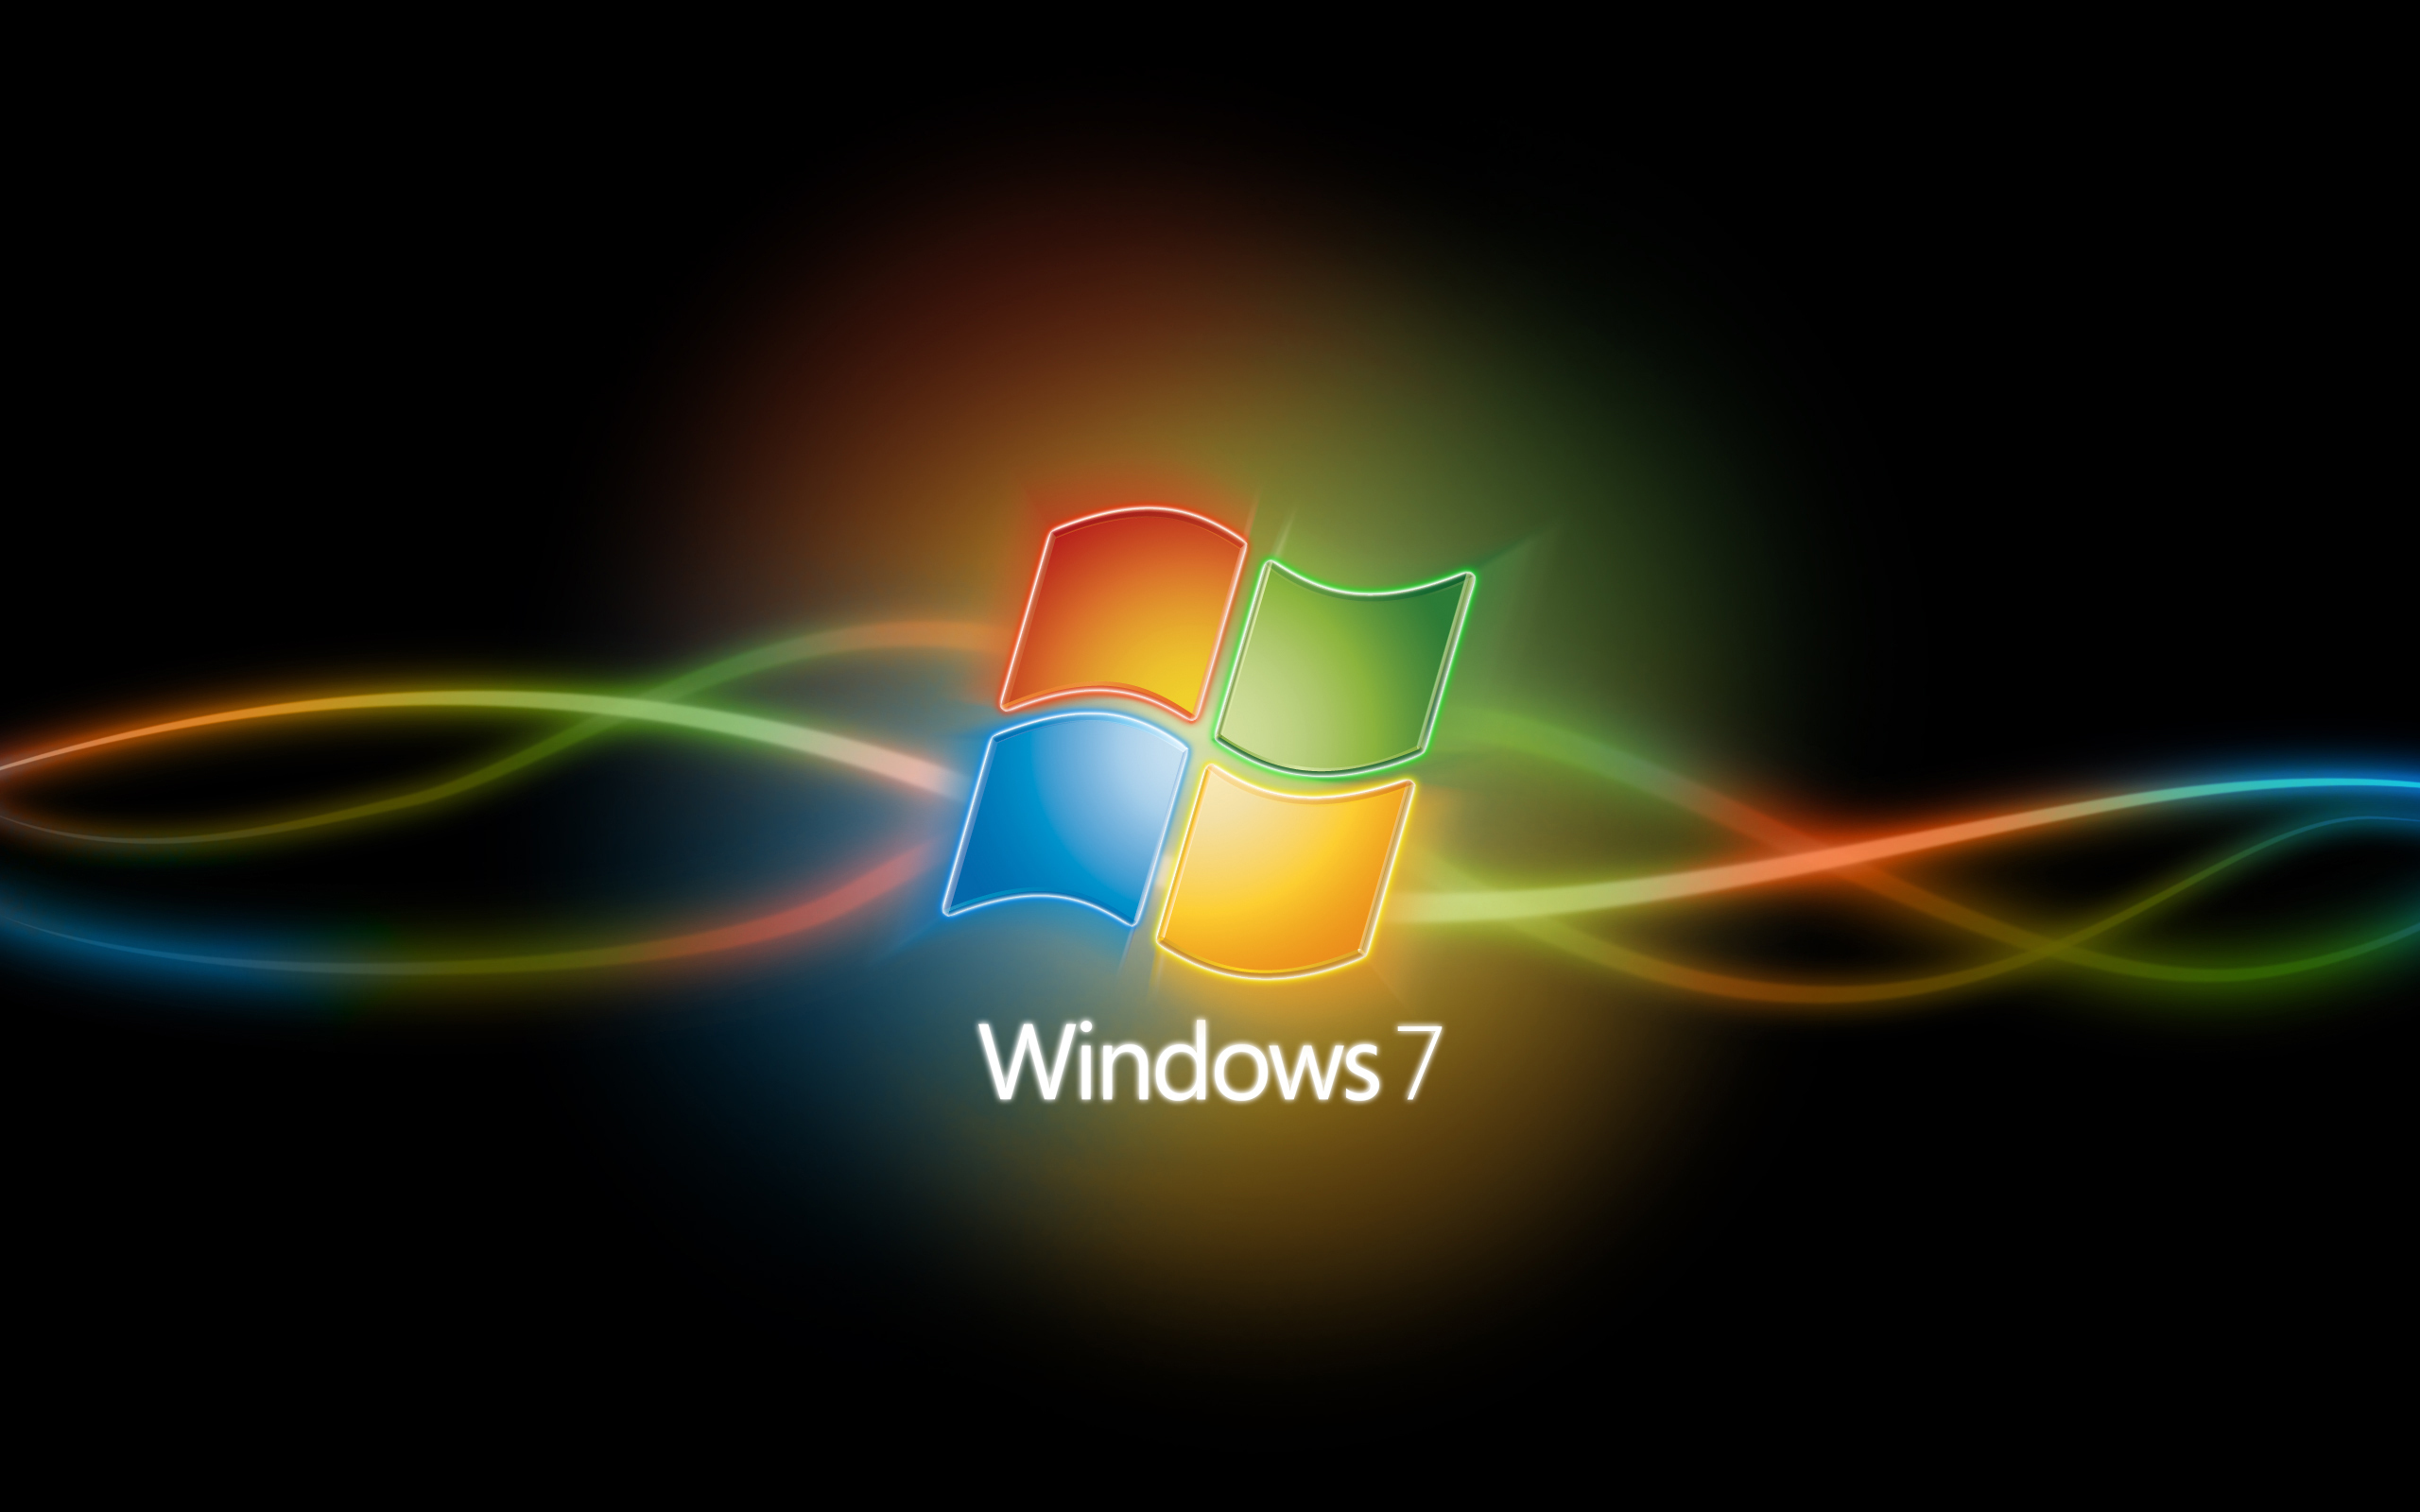 logo, windows 7, microsoft, technology, windows